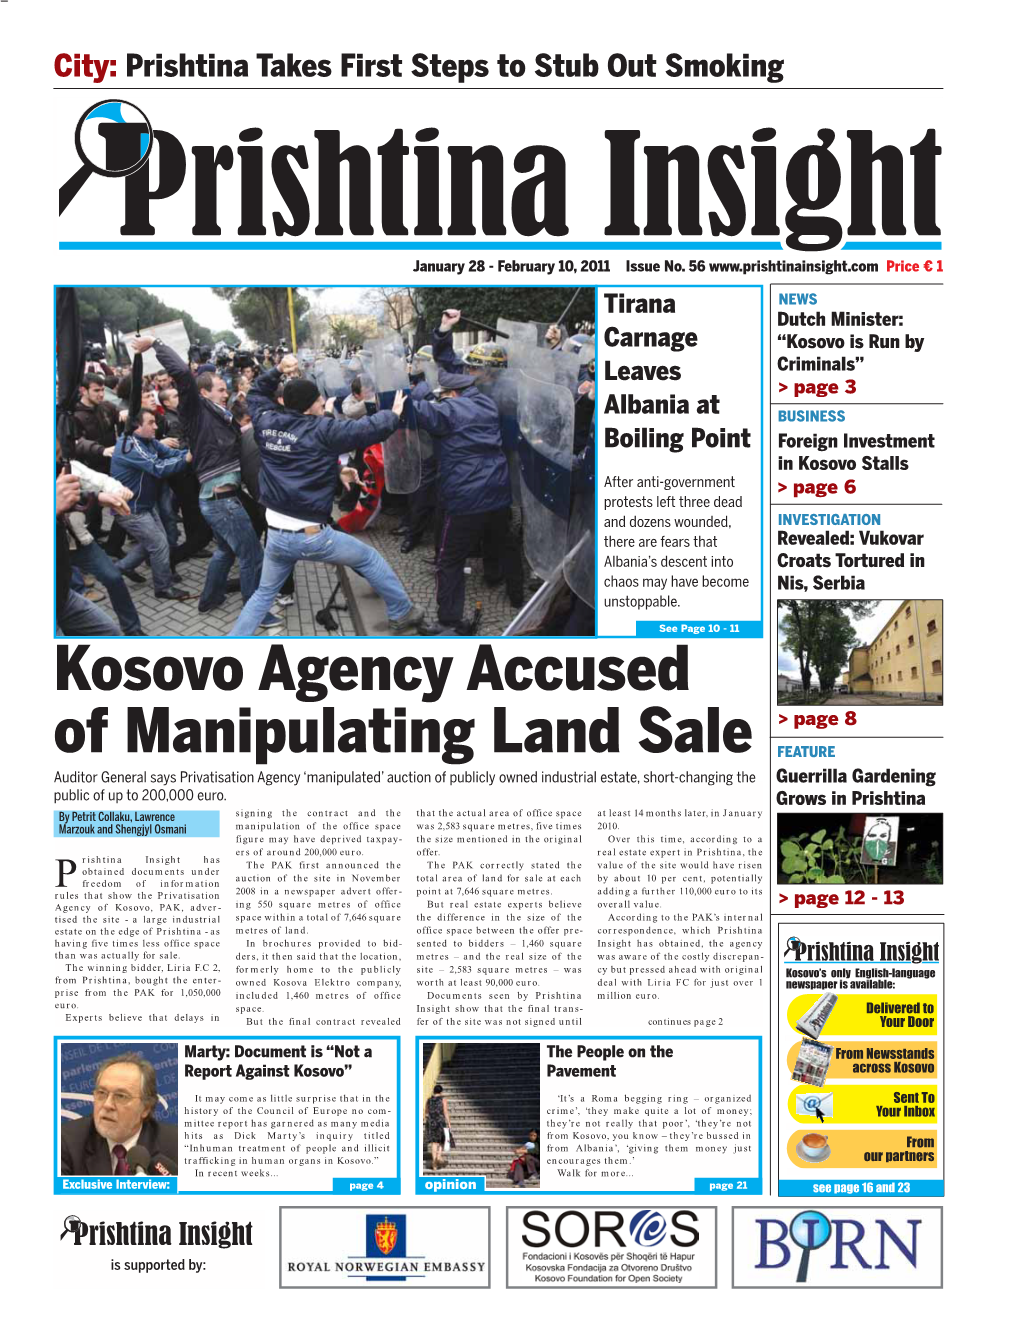 Kosovo Agency Accused of Manipulating Land Sale